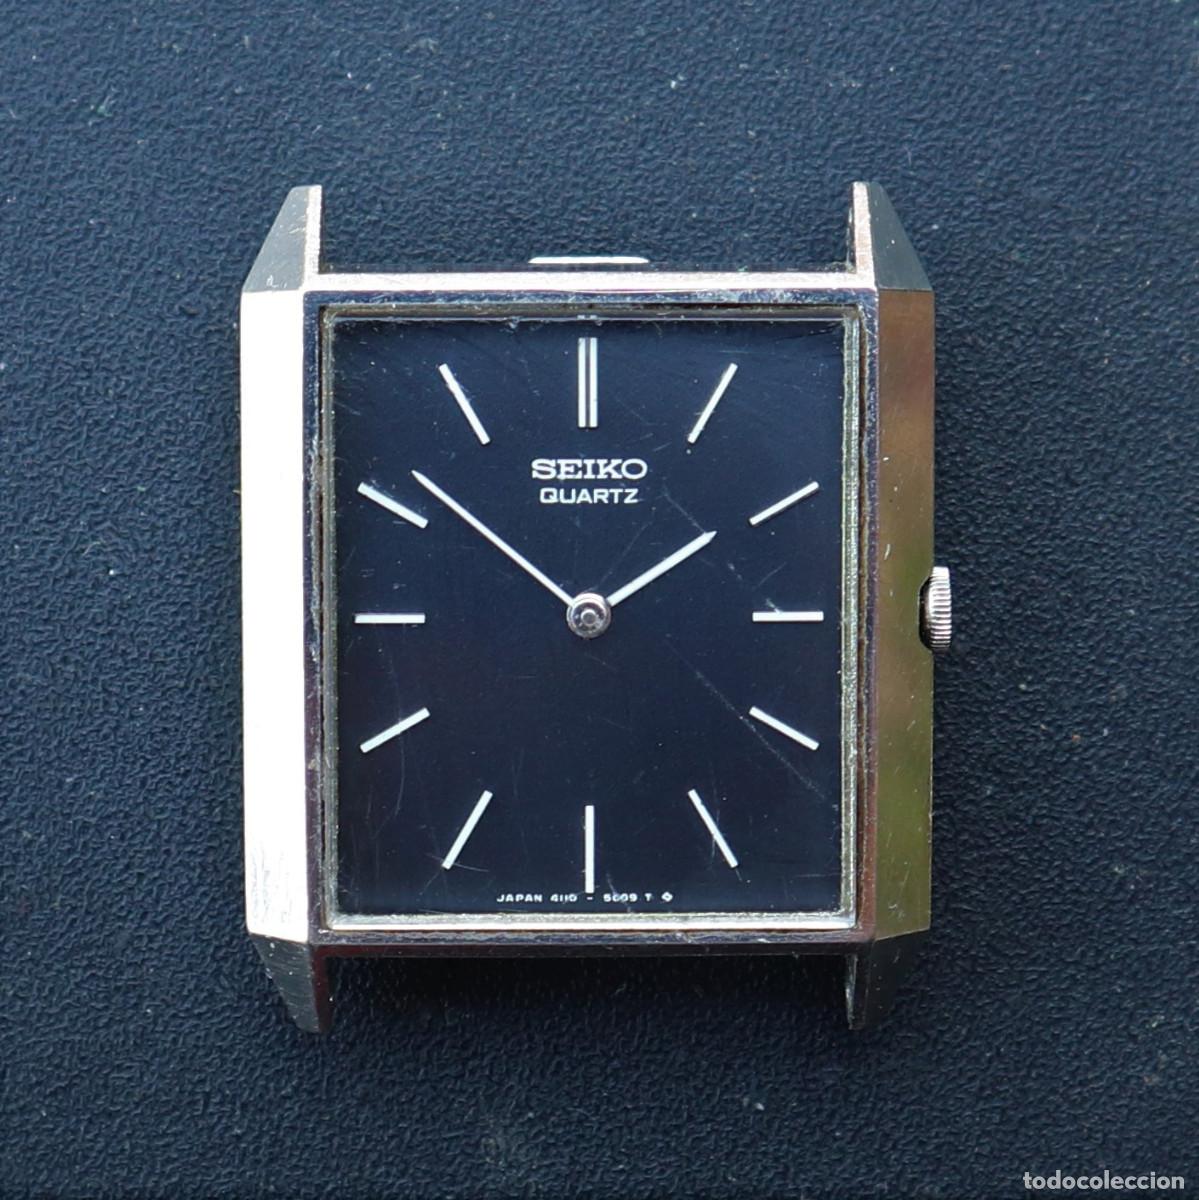 seiko quartz 28mm reloj vintage watch 4110 mont - Buy Vintage watches and  clocks on todocoleccion